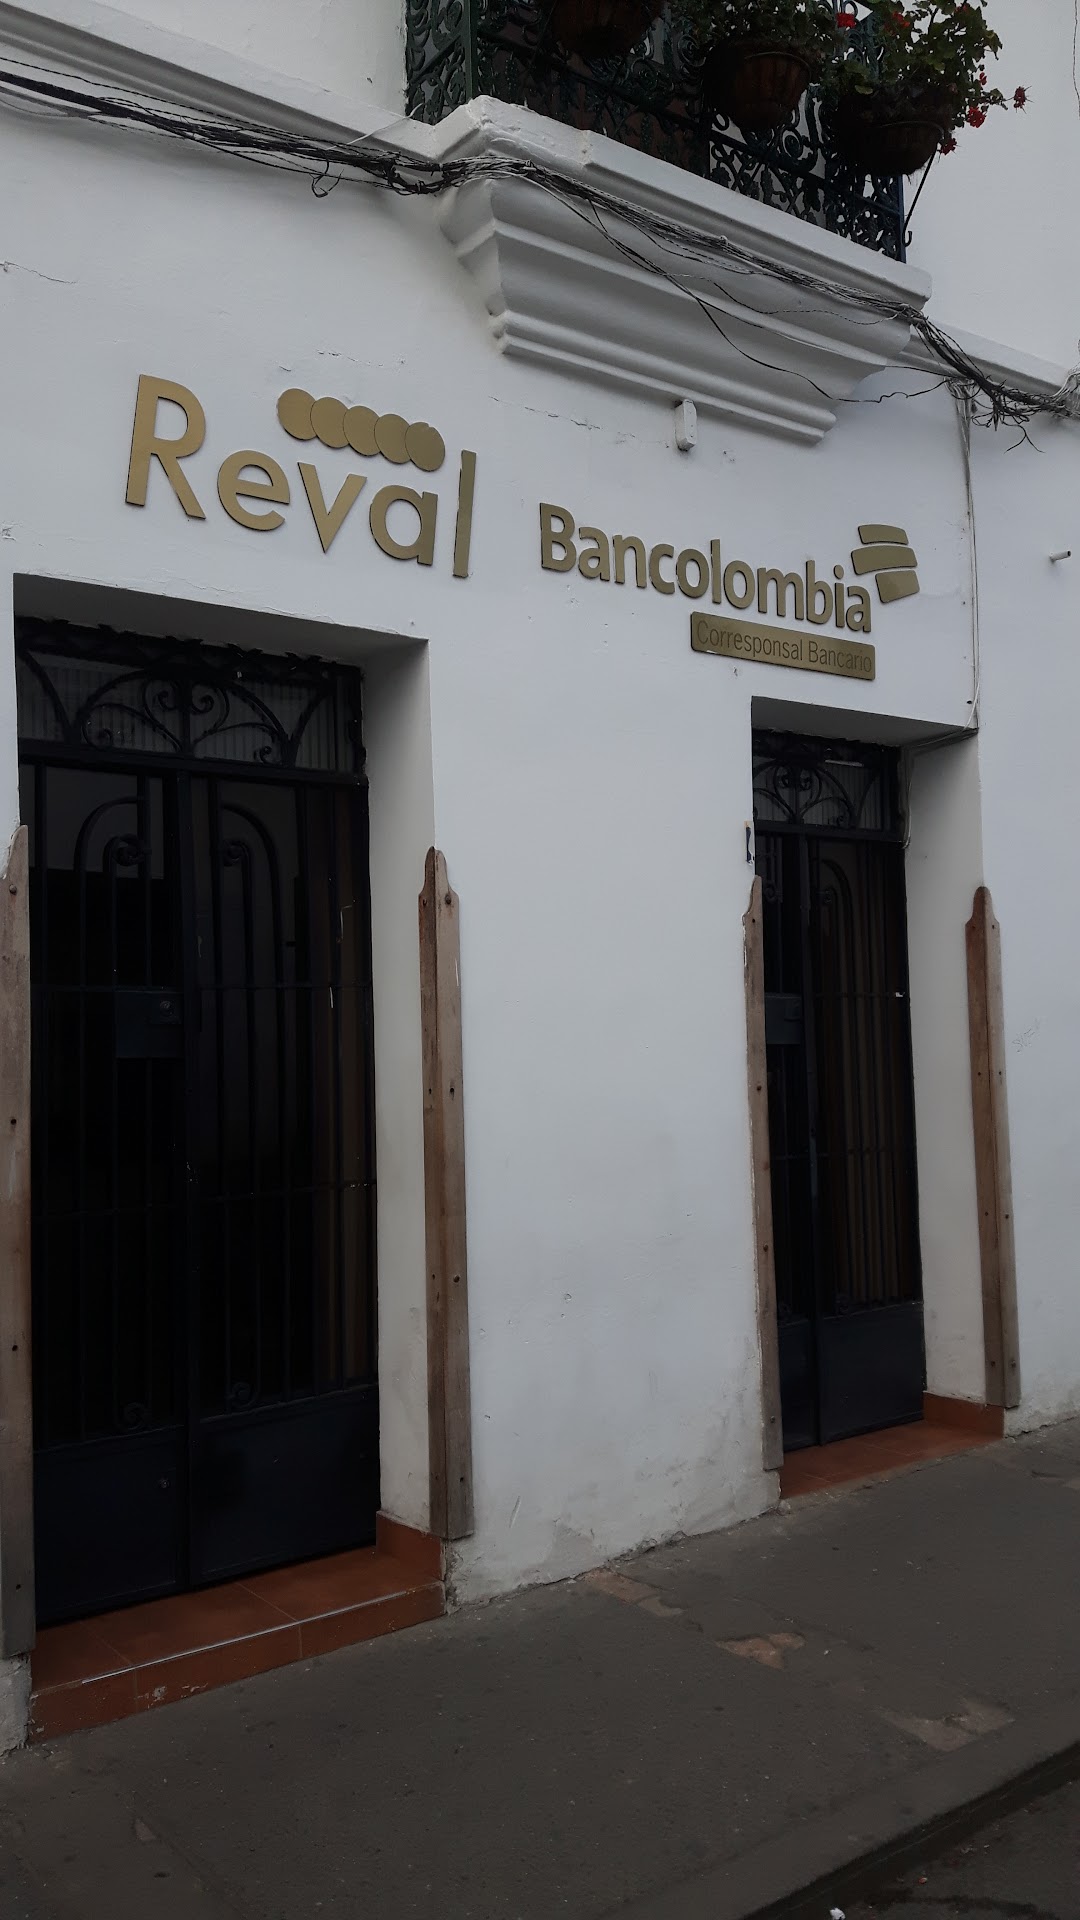 Bancolombia A La Mano (Reval)